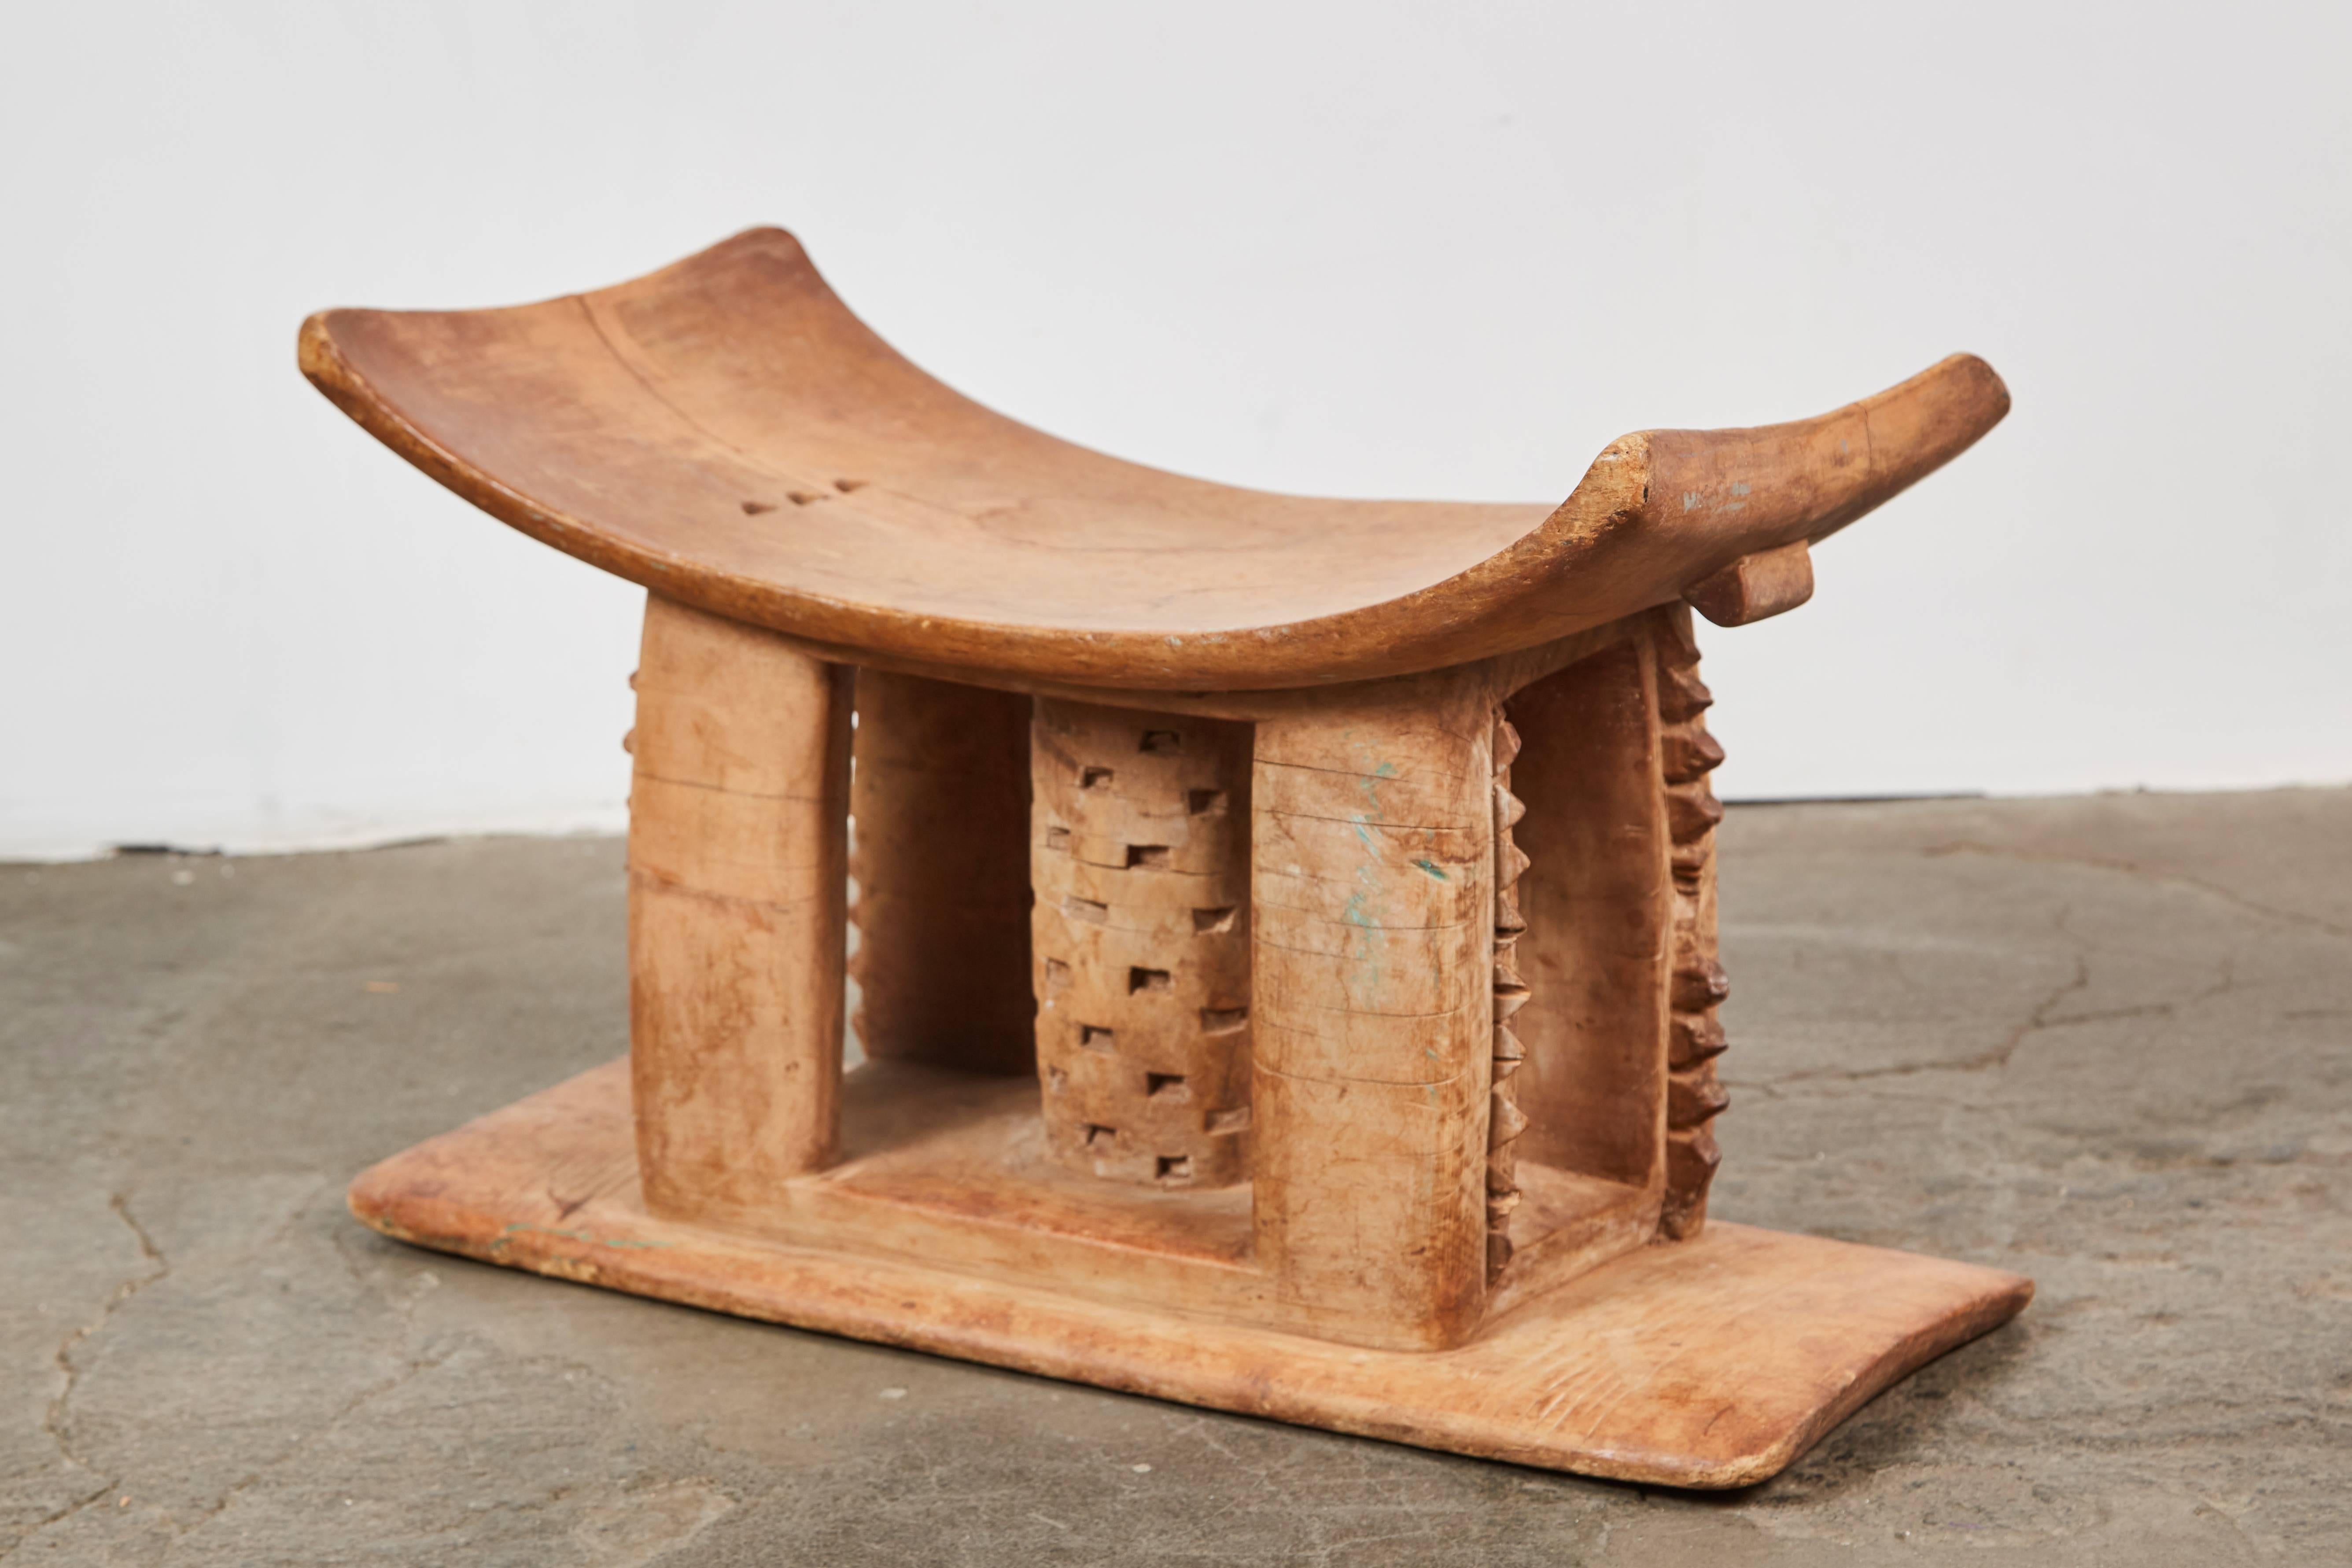 Elaborate hand-carved wood Ashanti stool. Made in Ghana, circa early 20th century.